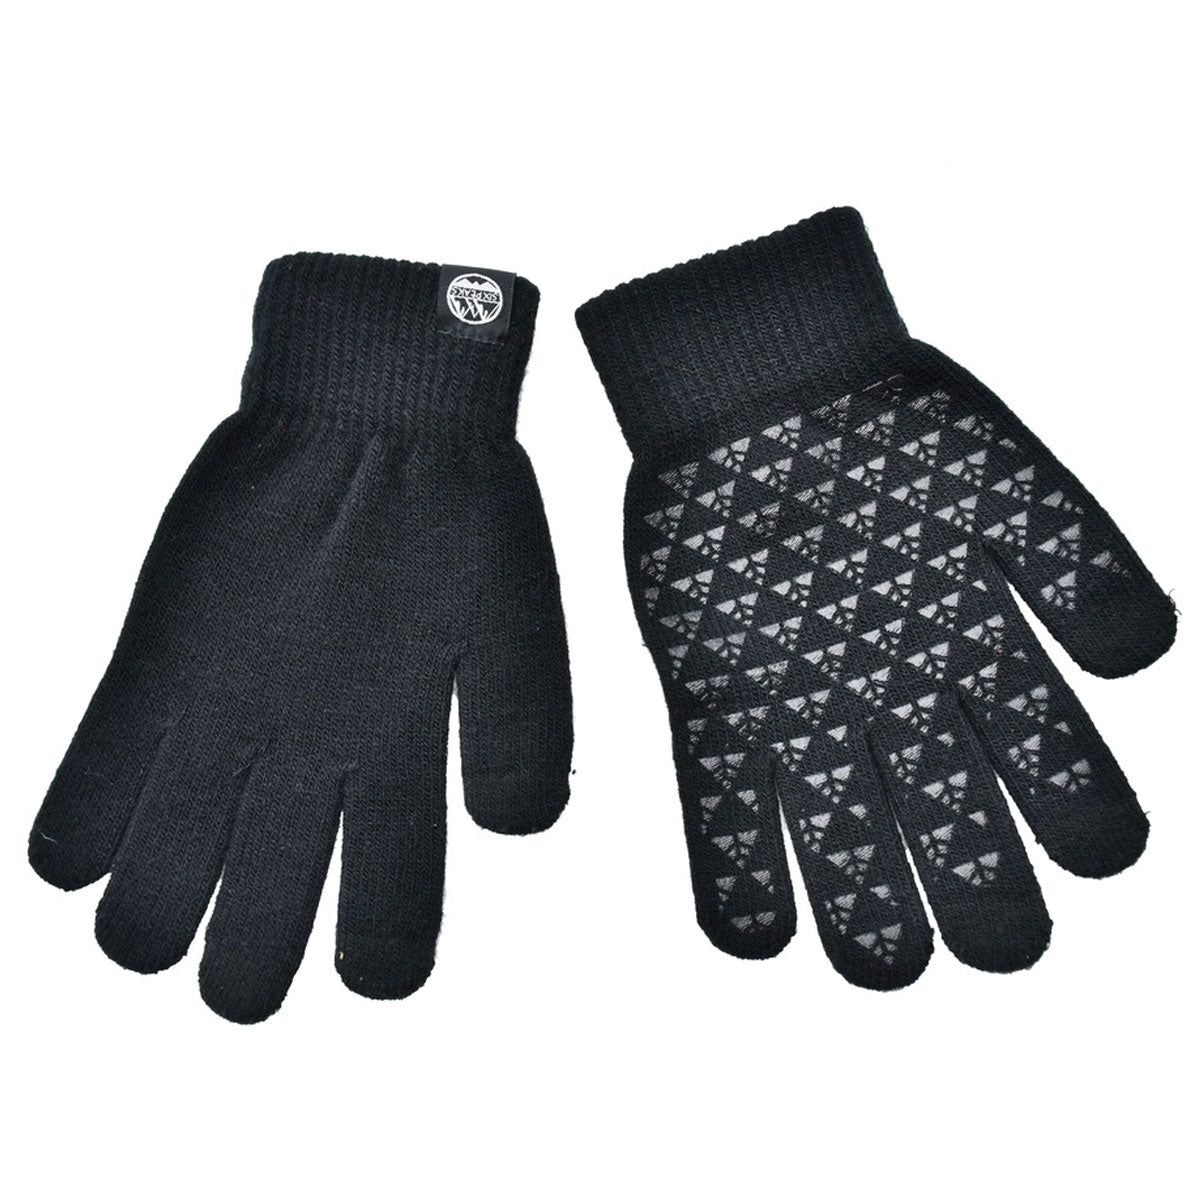 Six Peaks Winter Knitted Gloves - Adult - Black